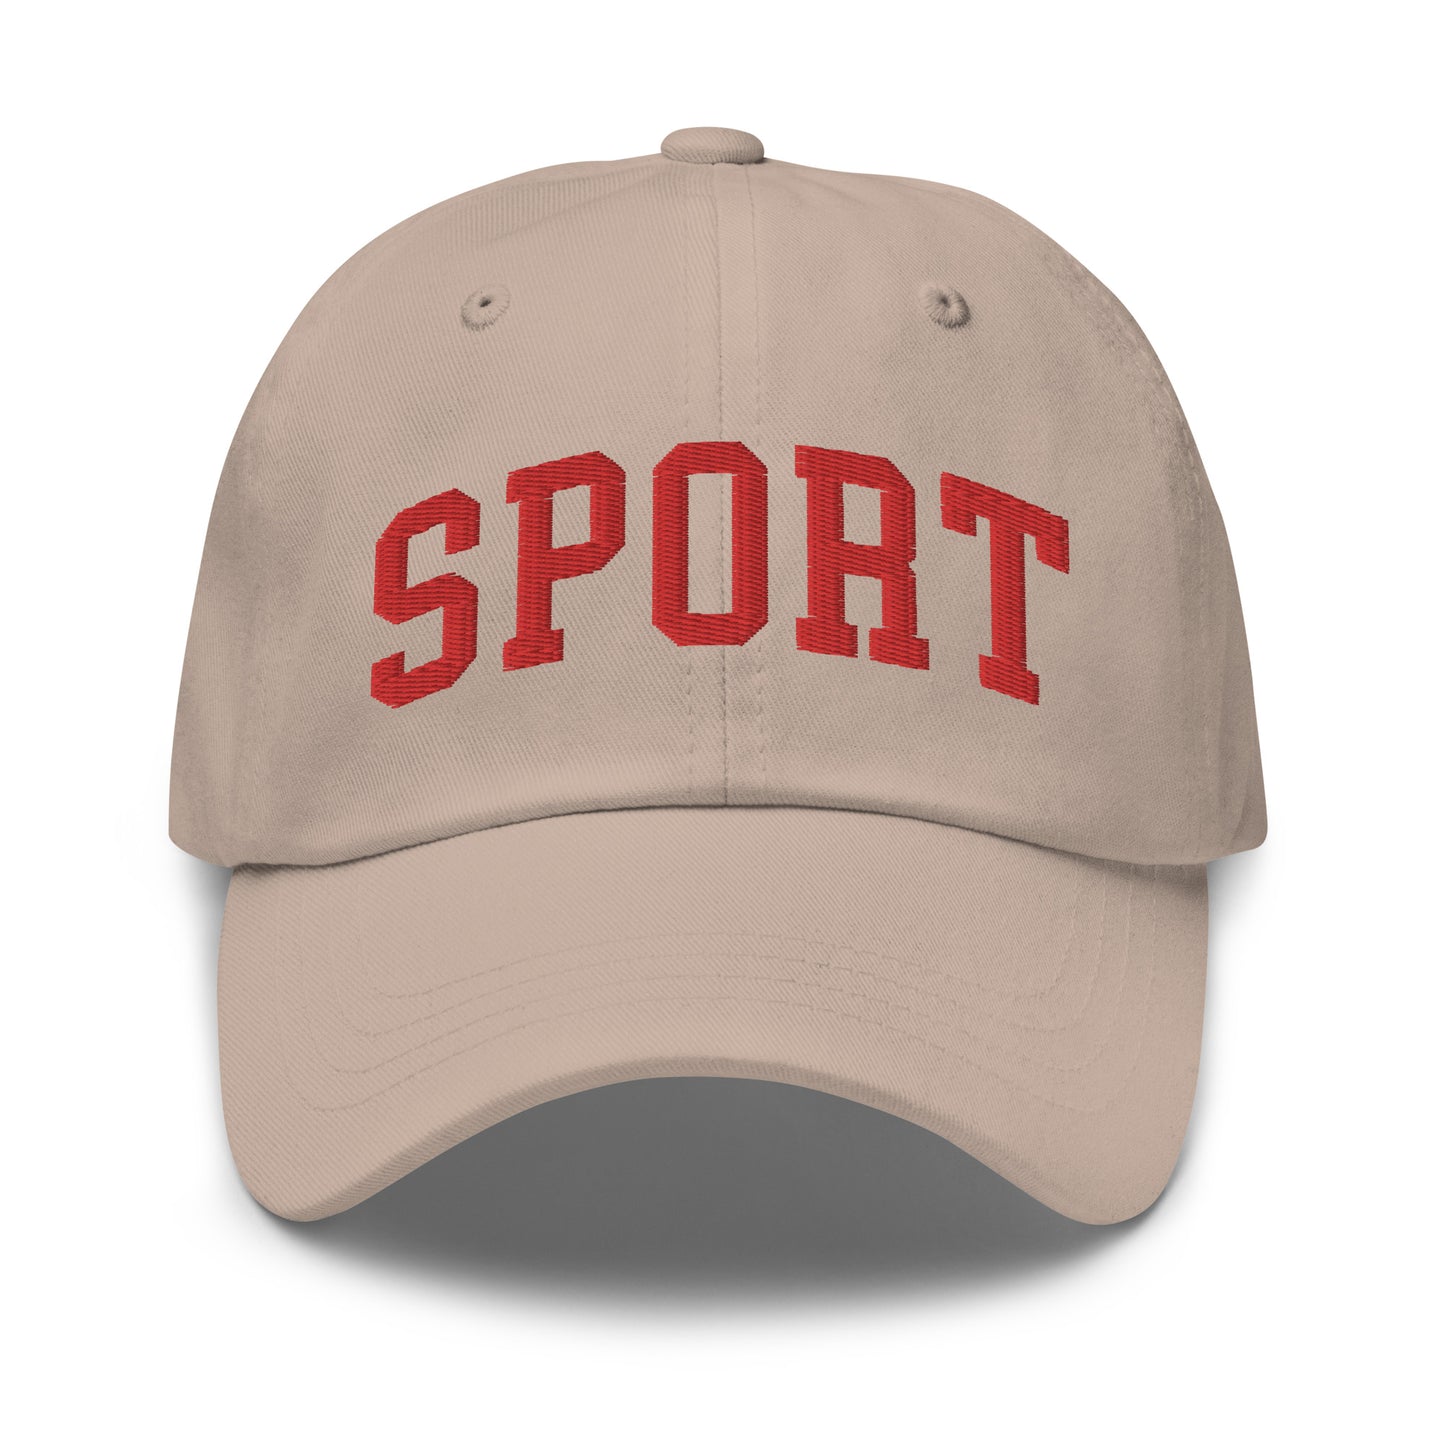 Sport hat